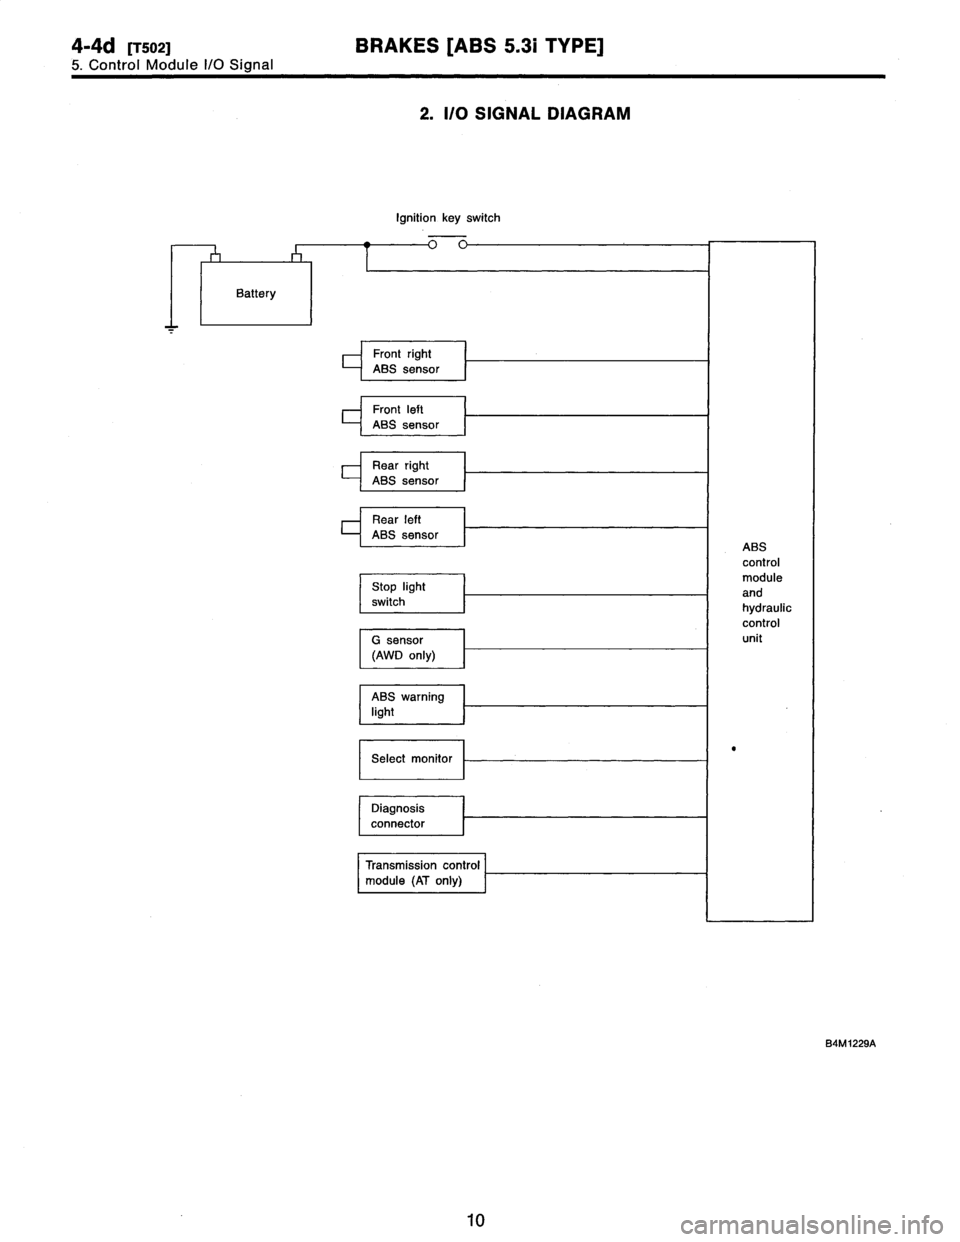 SUBARU LEGACY 1997  Service Repair Manual 
4-4d
[TSOZ]
BRAKES
[ABS
5
.31
TYPE]

5
.
Control
Module
I/O
Signal

2
.
I/O
SIGNAL
DIAGRAM

Ignition
key
switch

84101229A

10  